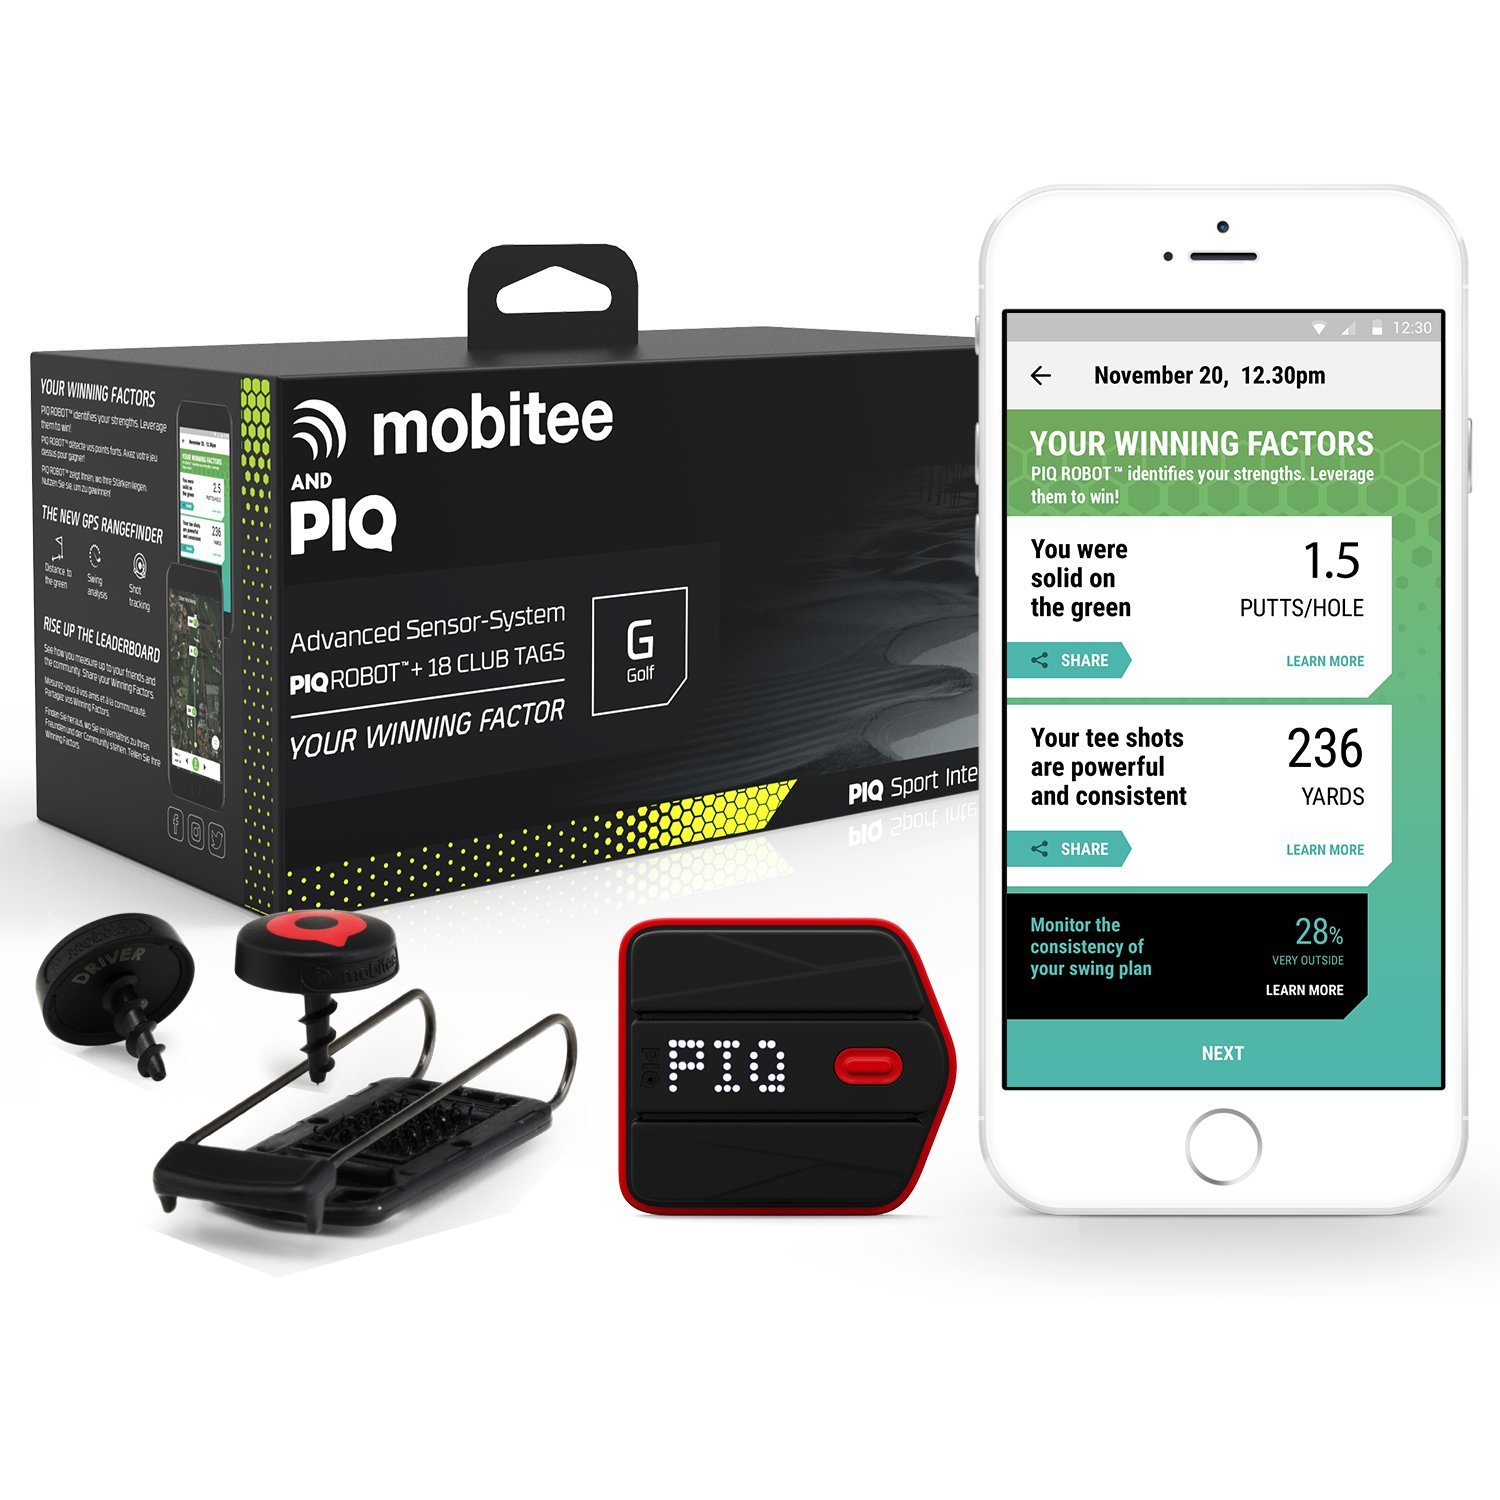 Mobitee & PIQ Wearable Golf Sport Tracker - Golf Course GPS Rangefinder on your wrist, Club GPS Shot Tracker, Club Shot Statistics, Golf Swing Ana 1